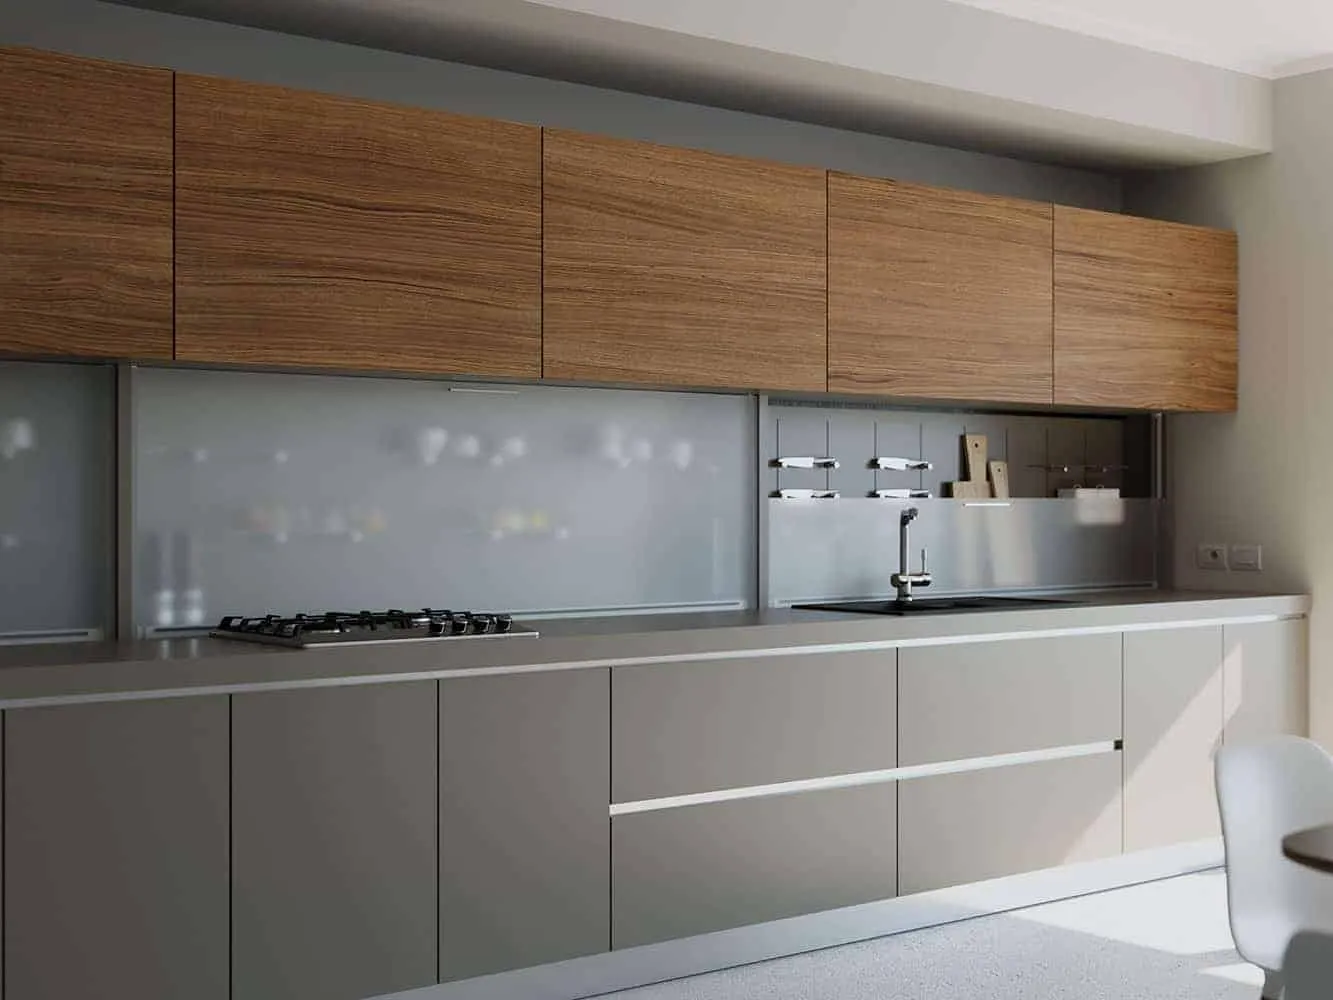 salice mover flat downward sliding system for wooden modular kitchen cabinets